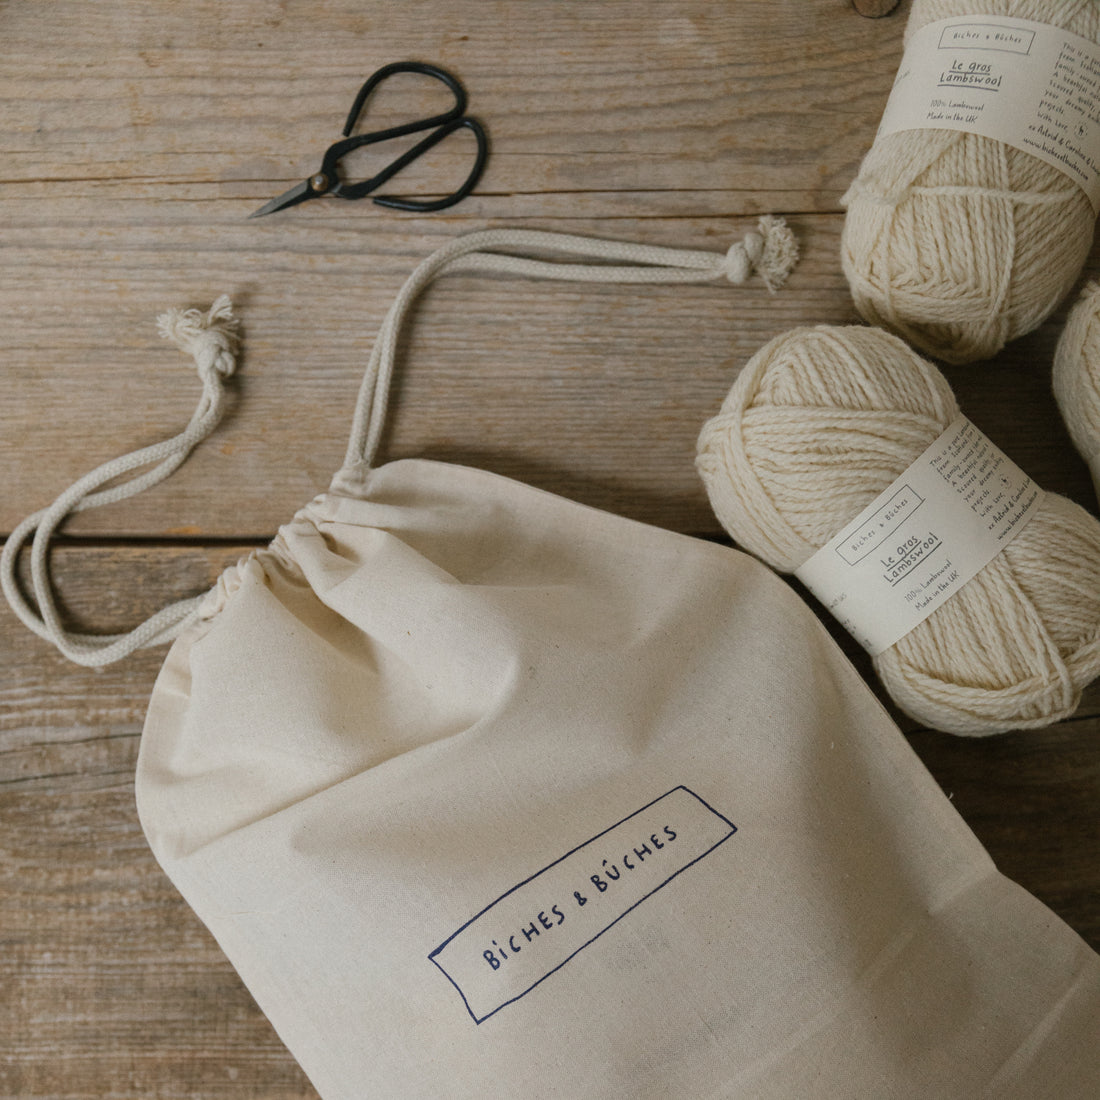 Biches & Bûches no. 10 Knitting Kit